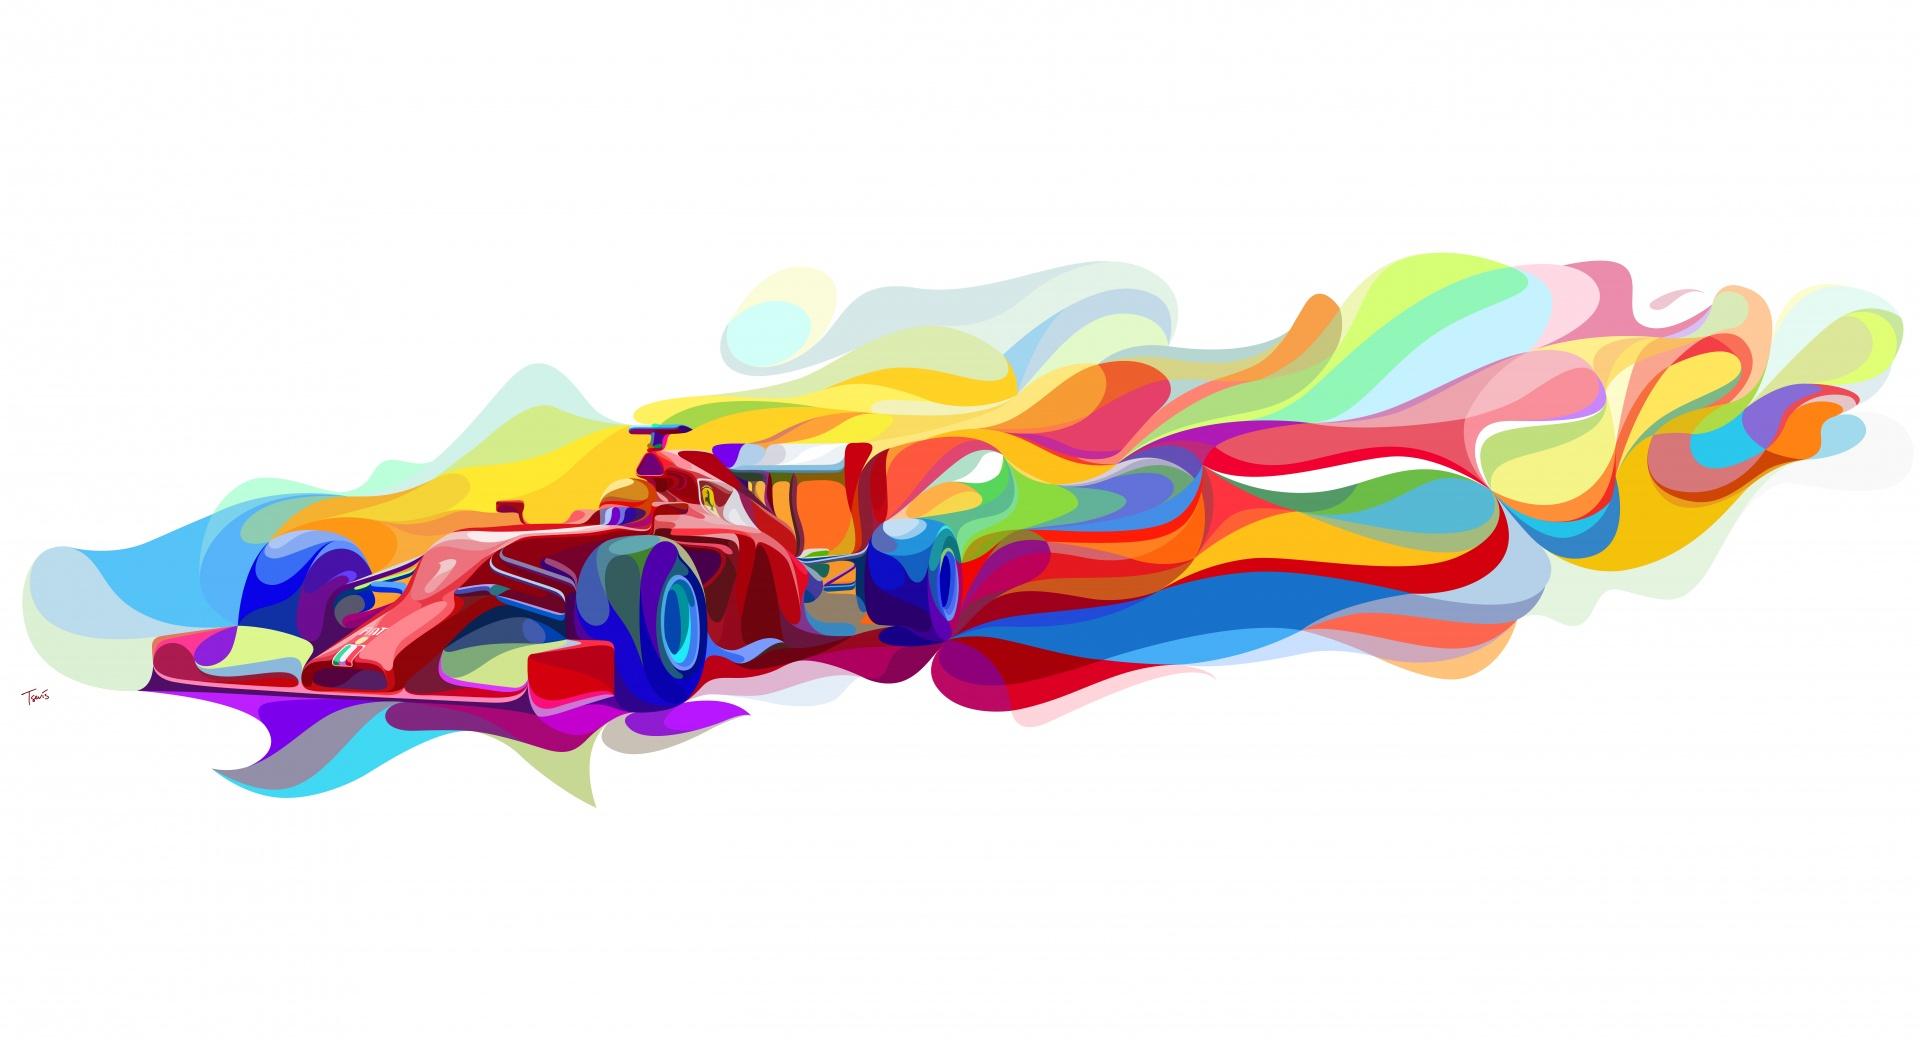 Ferrari Formula One car at 1280 x 960 size wallpapers HD quality